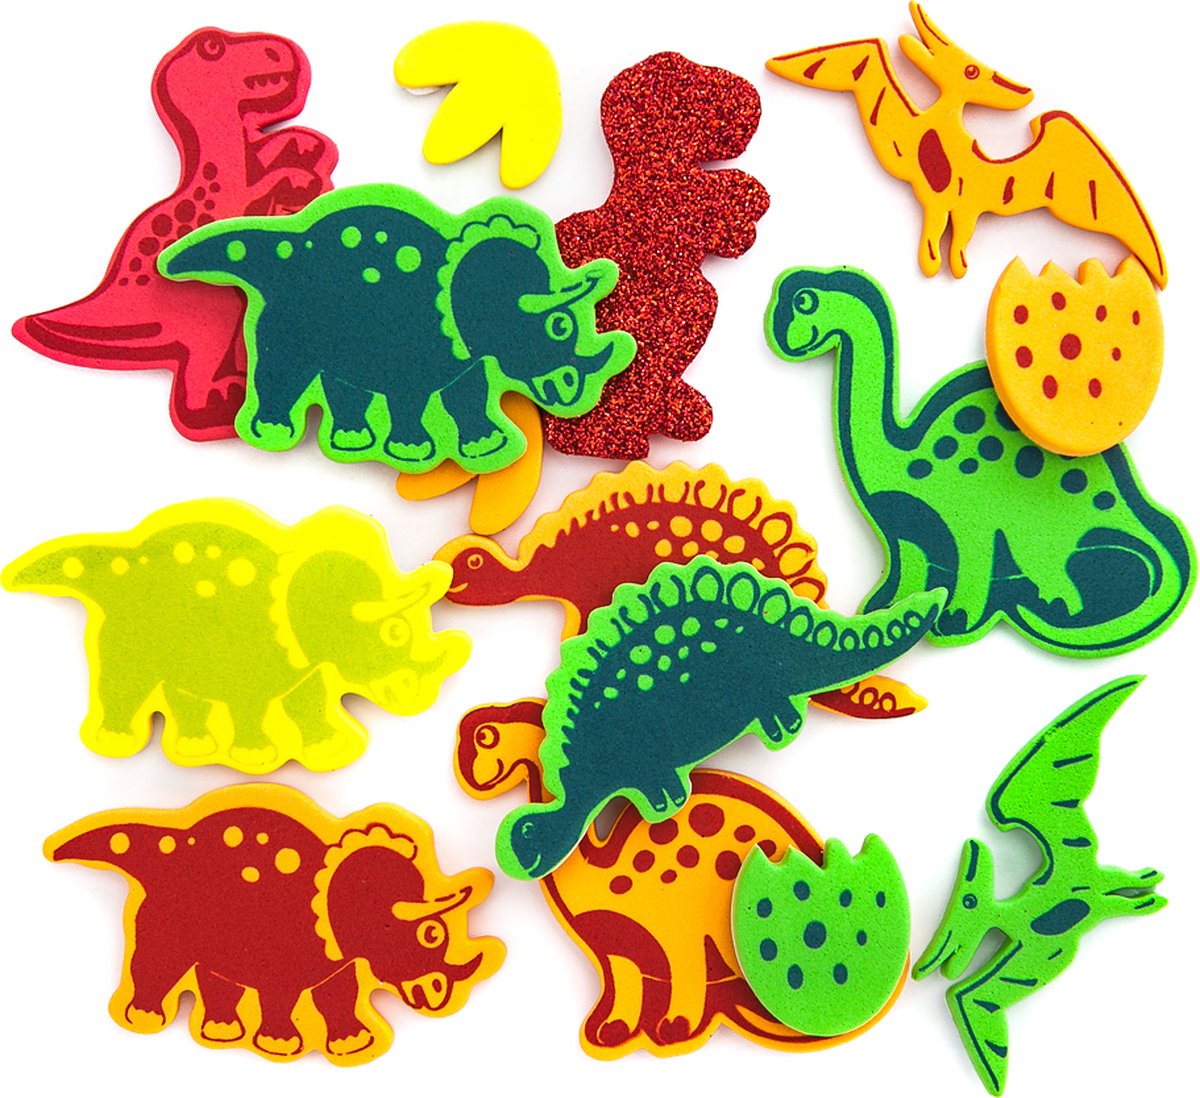 20 Foam Stickers Dinosaurussen | Knutselstickers Dino's | Knutselen Meisjes, Knutselen Jongens, Knutselen Kinderen | Dino Foamstickers | Kleuter Stickers | Kinderstickers | Dinosaurus Stickers voor Kinderen | Cadeautje Kleuter | Cadeautje Jongen